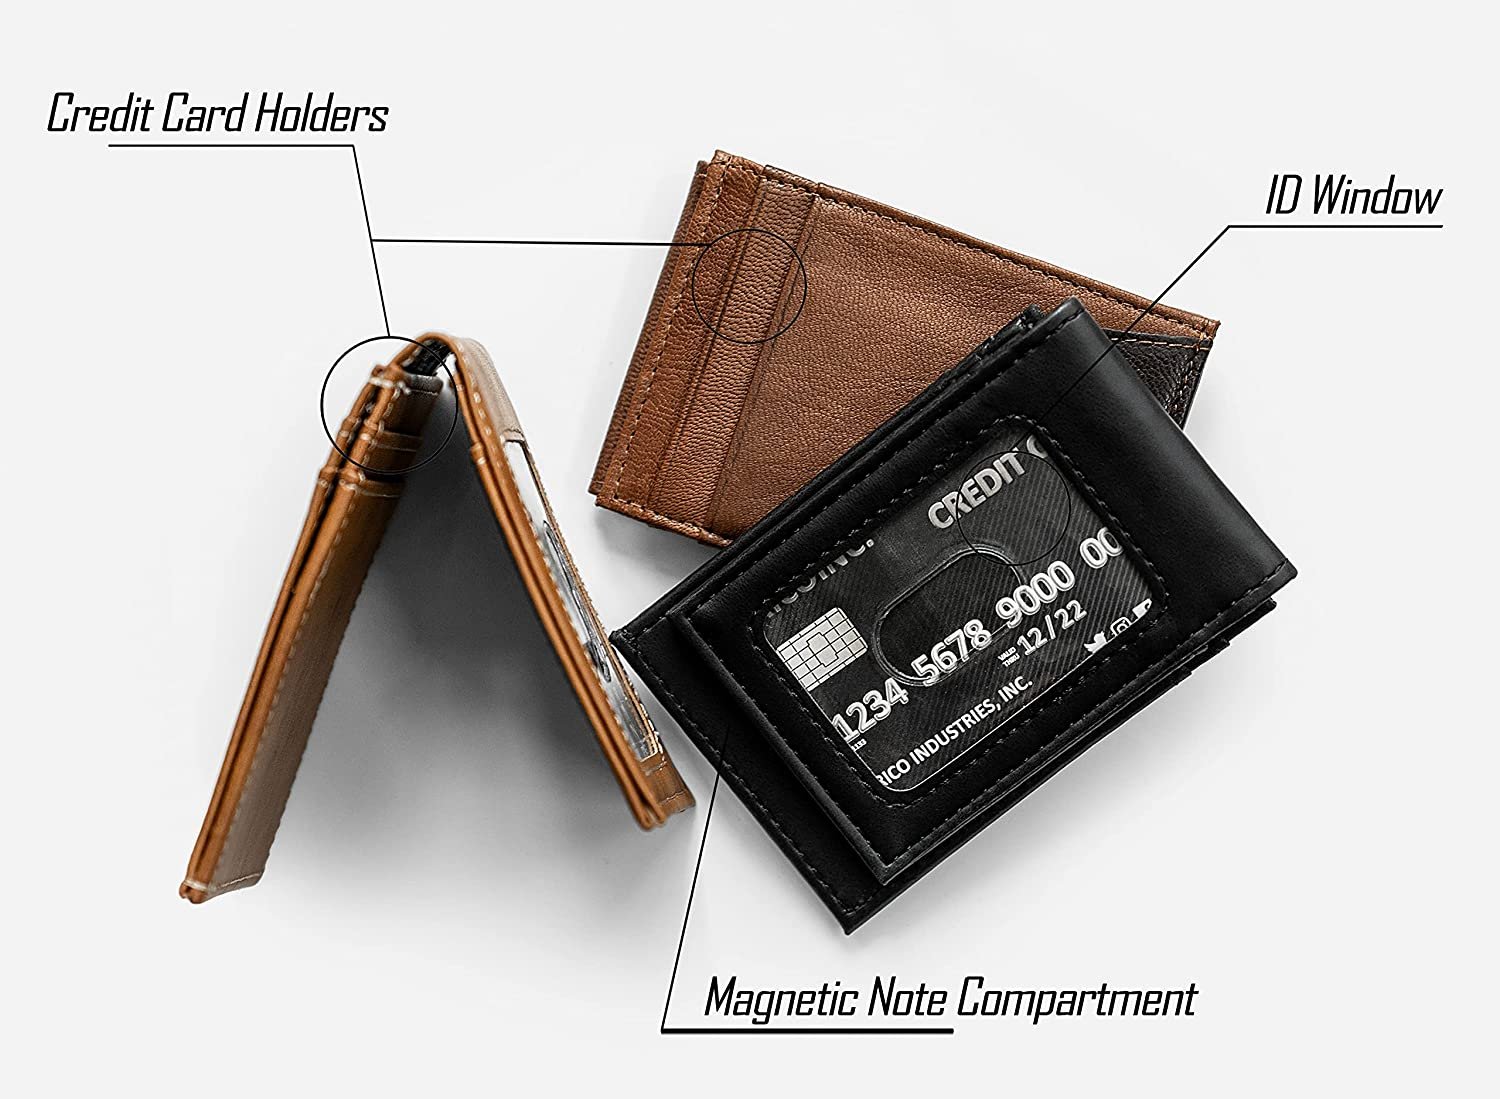 Colorado Avalanche Premium Brown Leather Wallet, Front Pocket Magnetic Money Clip, Laser Engraved, Vegan